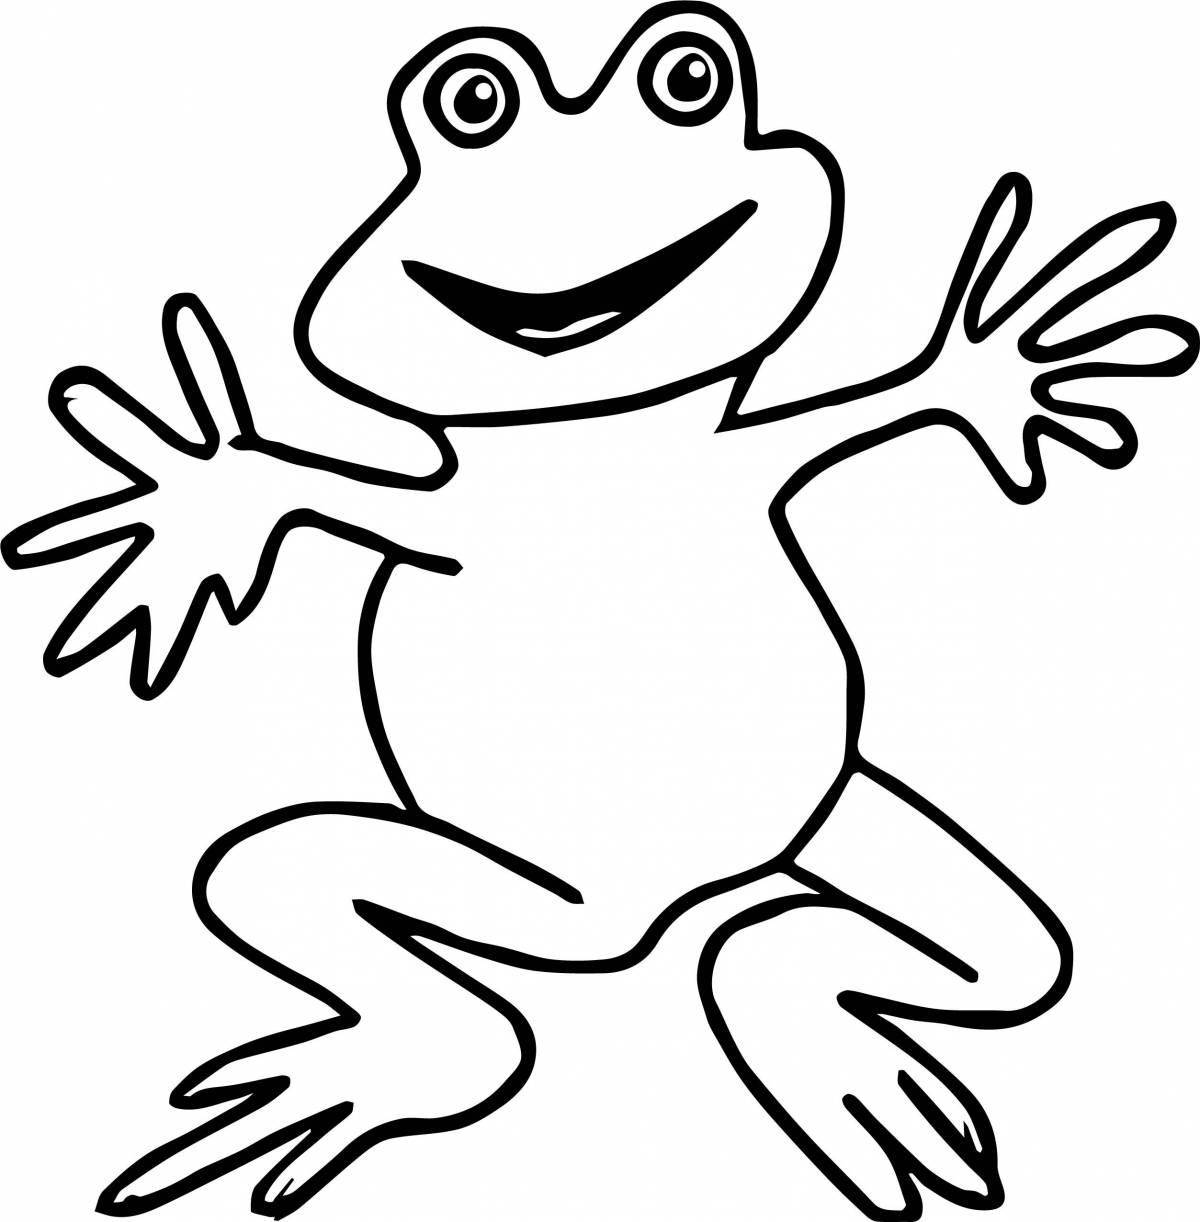 Coloring book bright traveler frog for kids